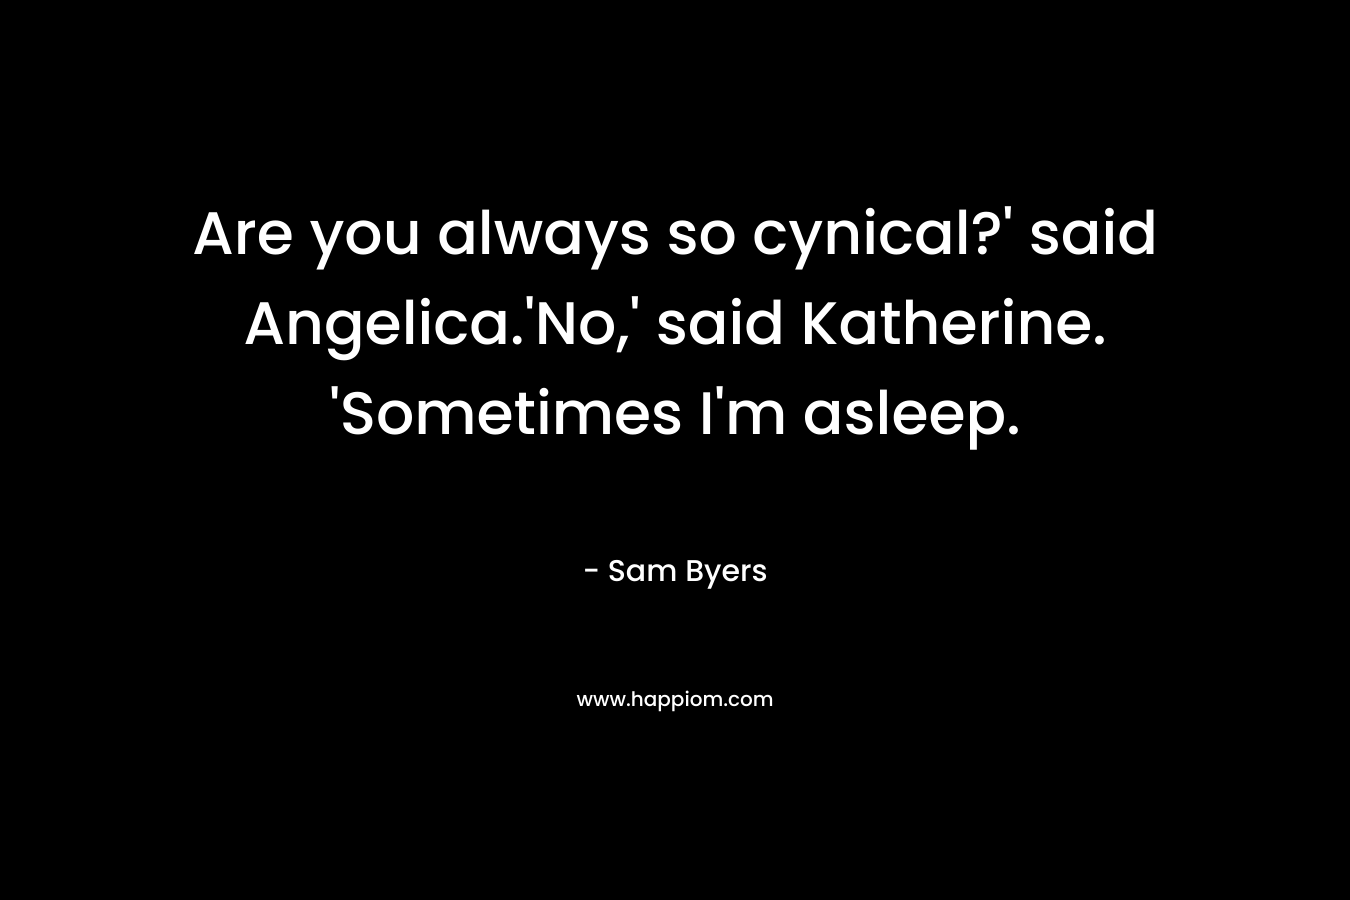 Are you always so cynical?' said Angelica.'No,' said Katherine. 'Sometimes I'm asleep.